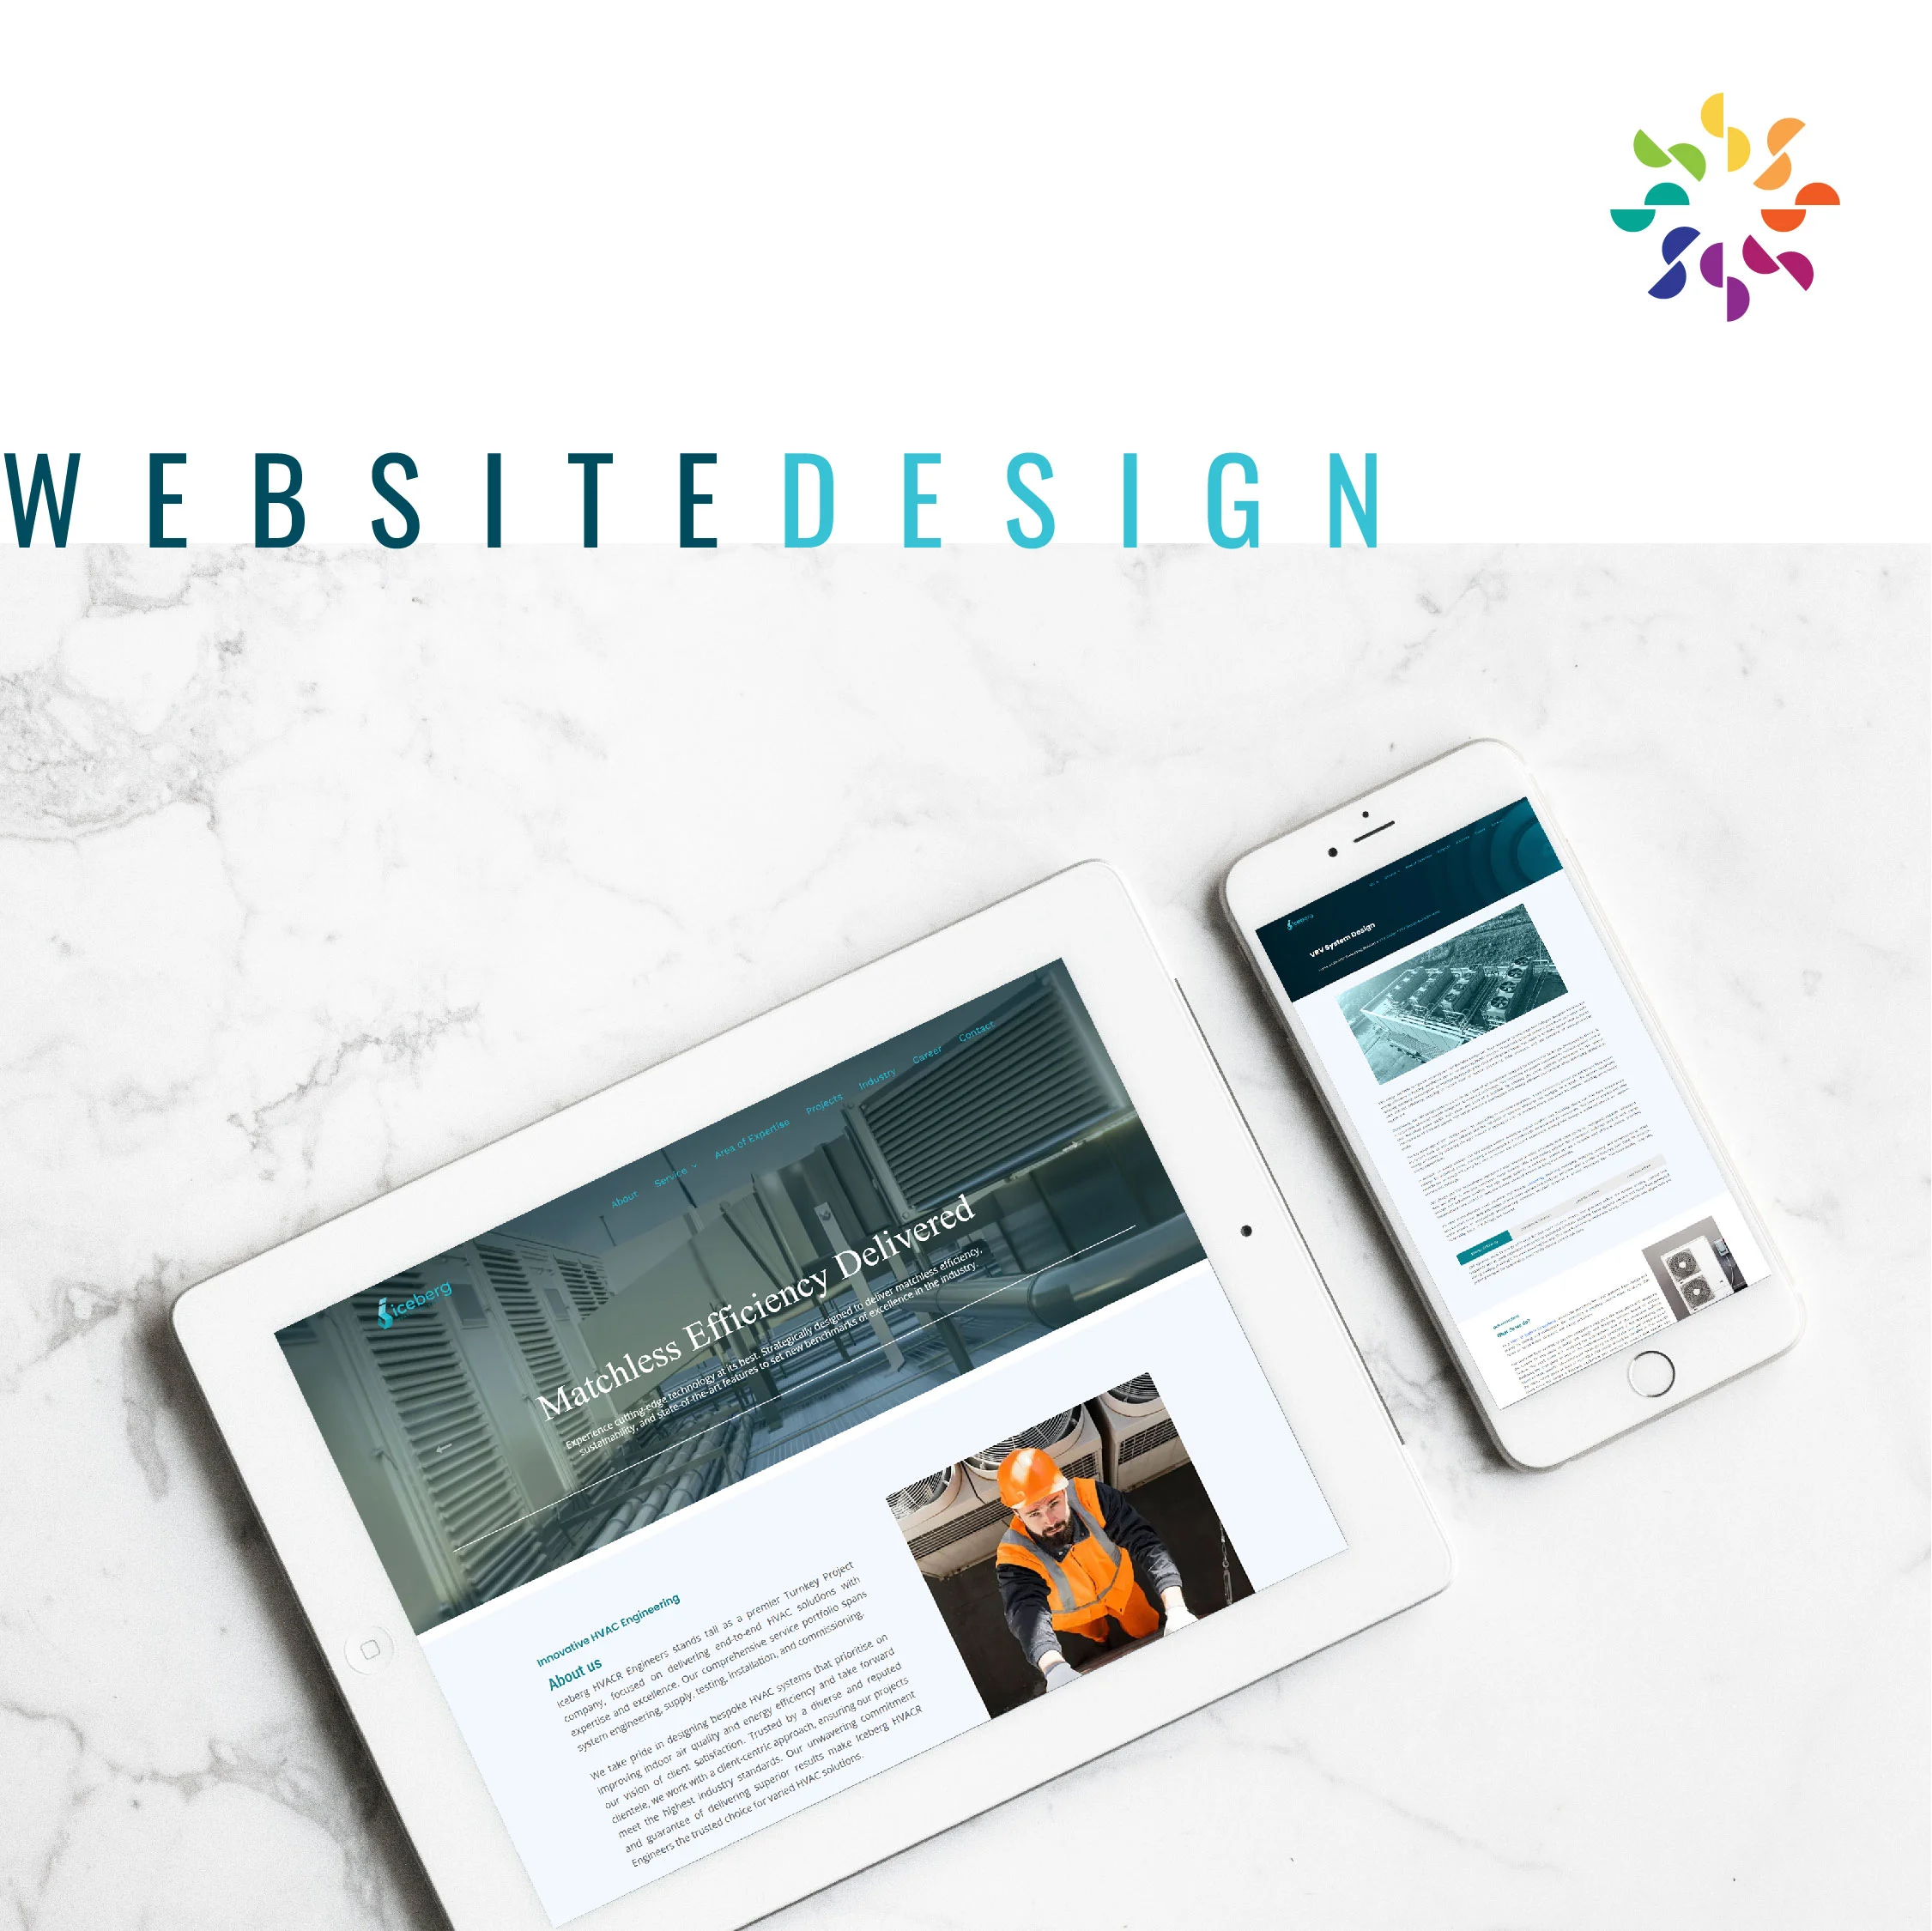 Iceberg website design service by wdsoft creative agency